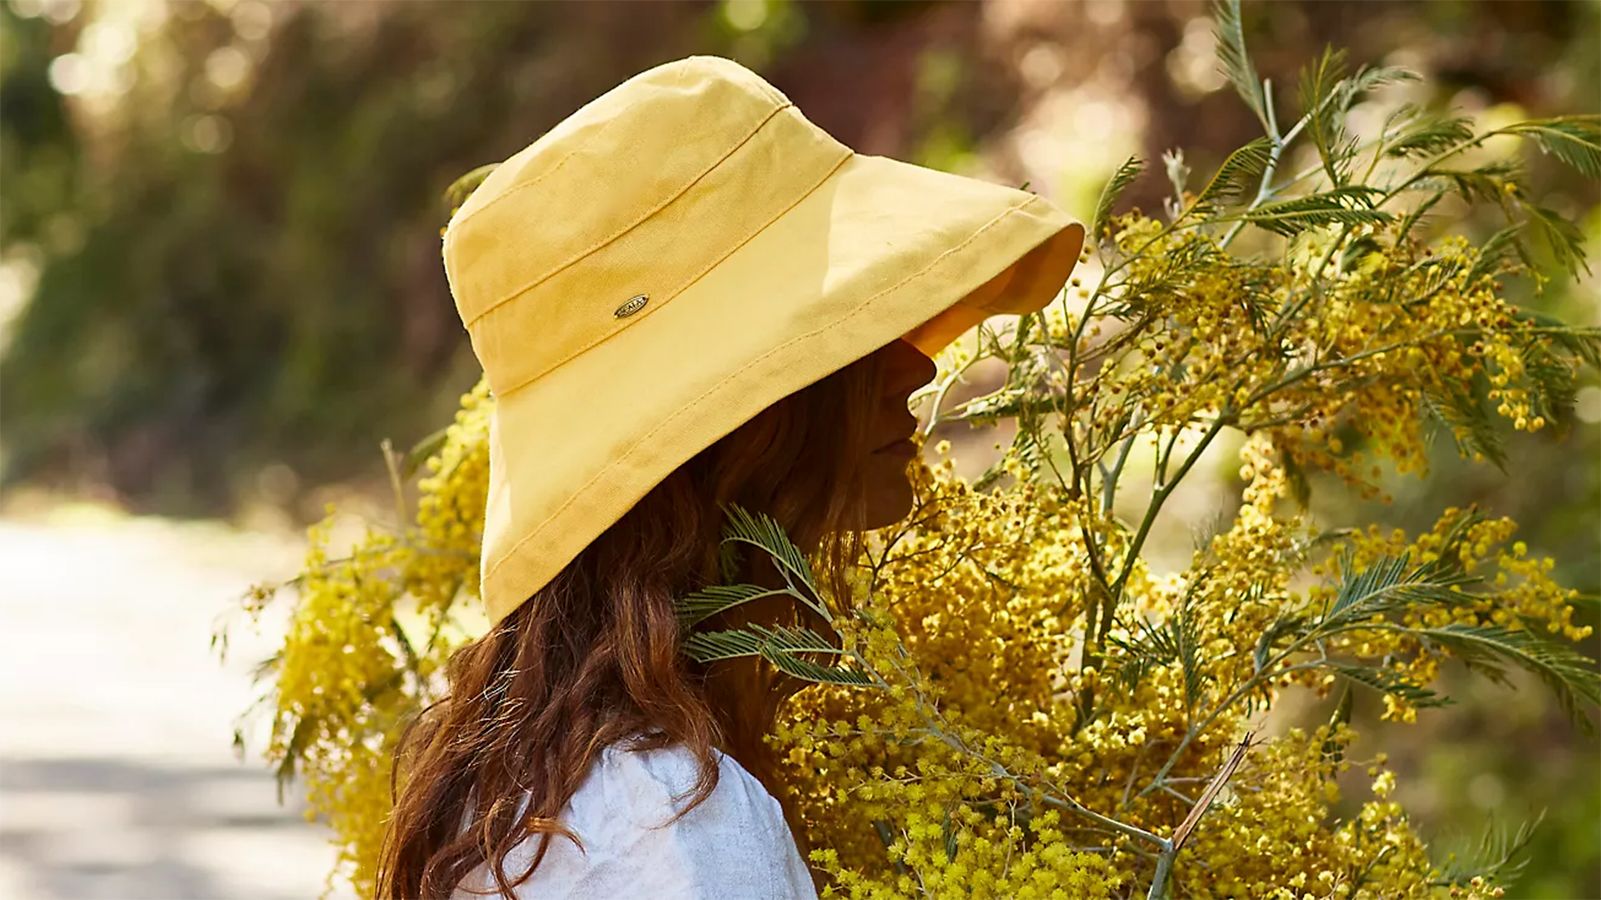 Outdoor Hats  Shop UPF50+ hats online - Hat World Australia